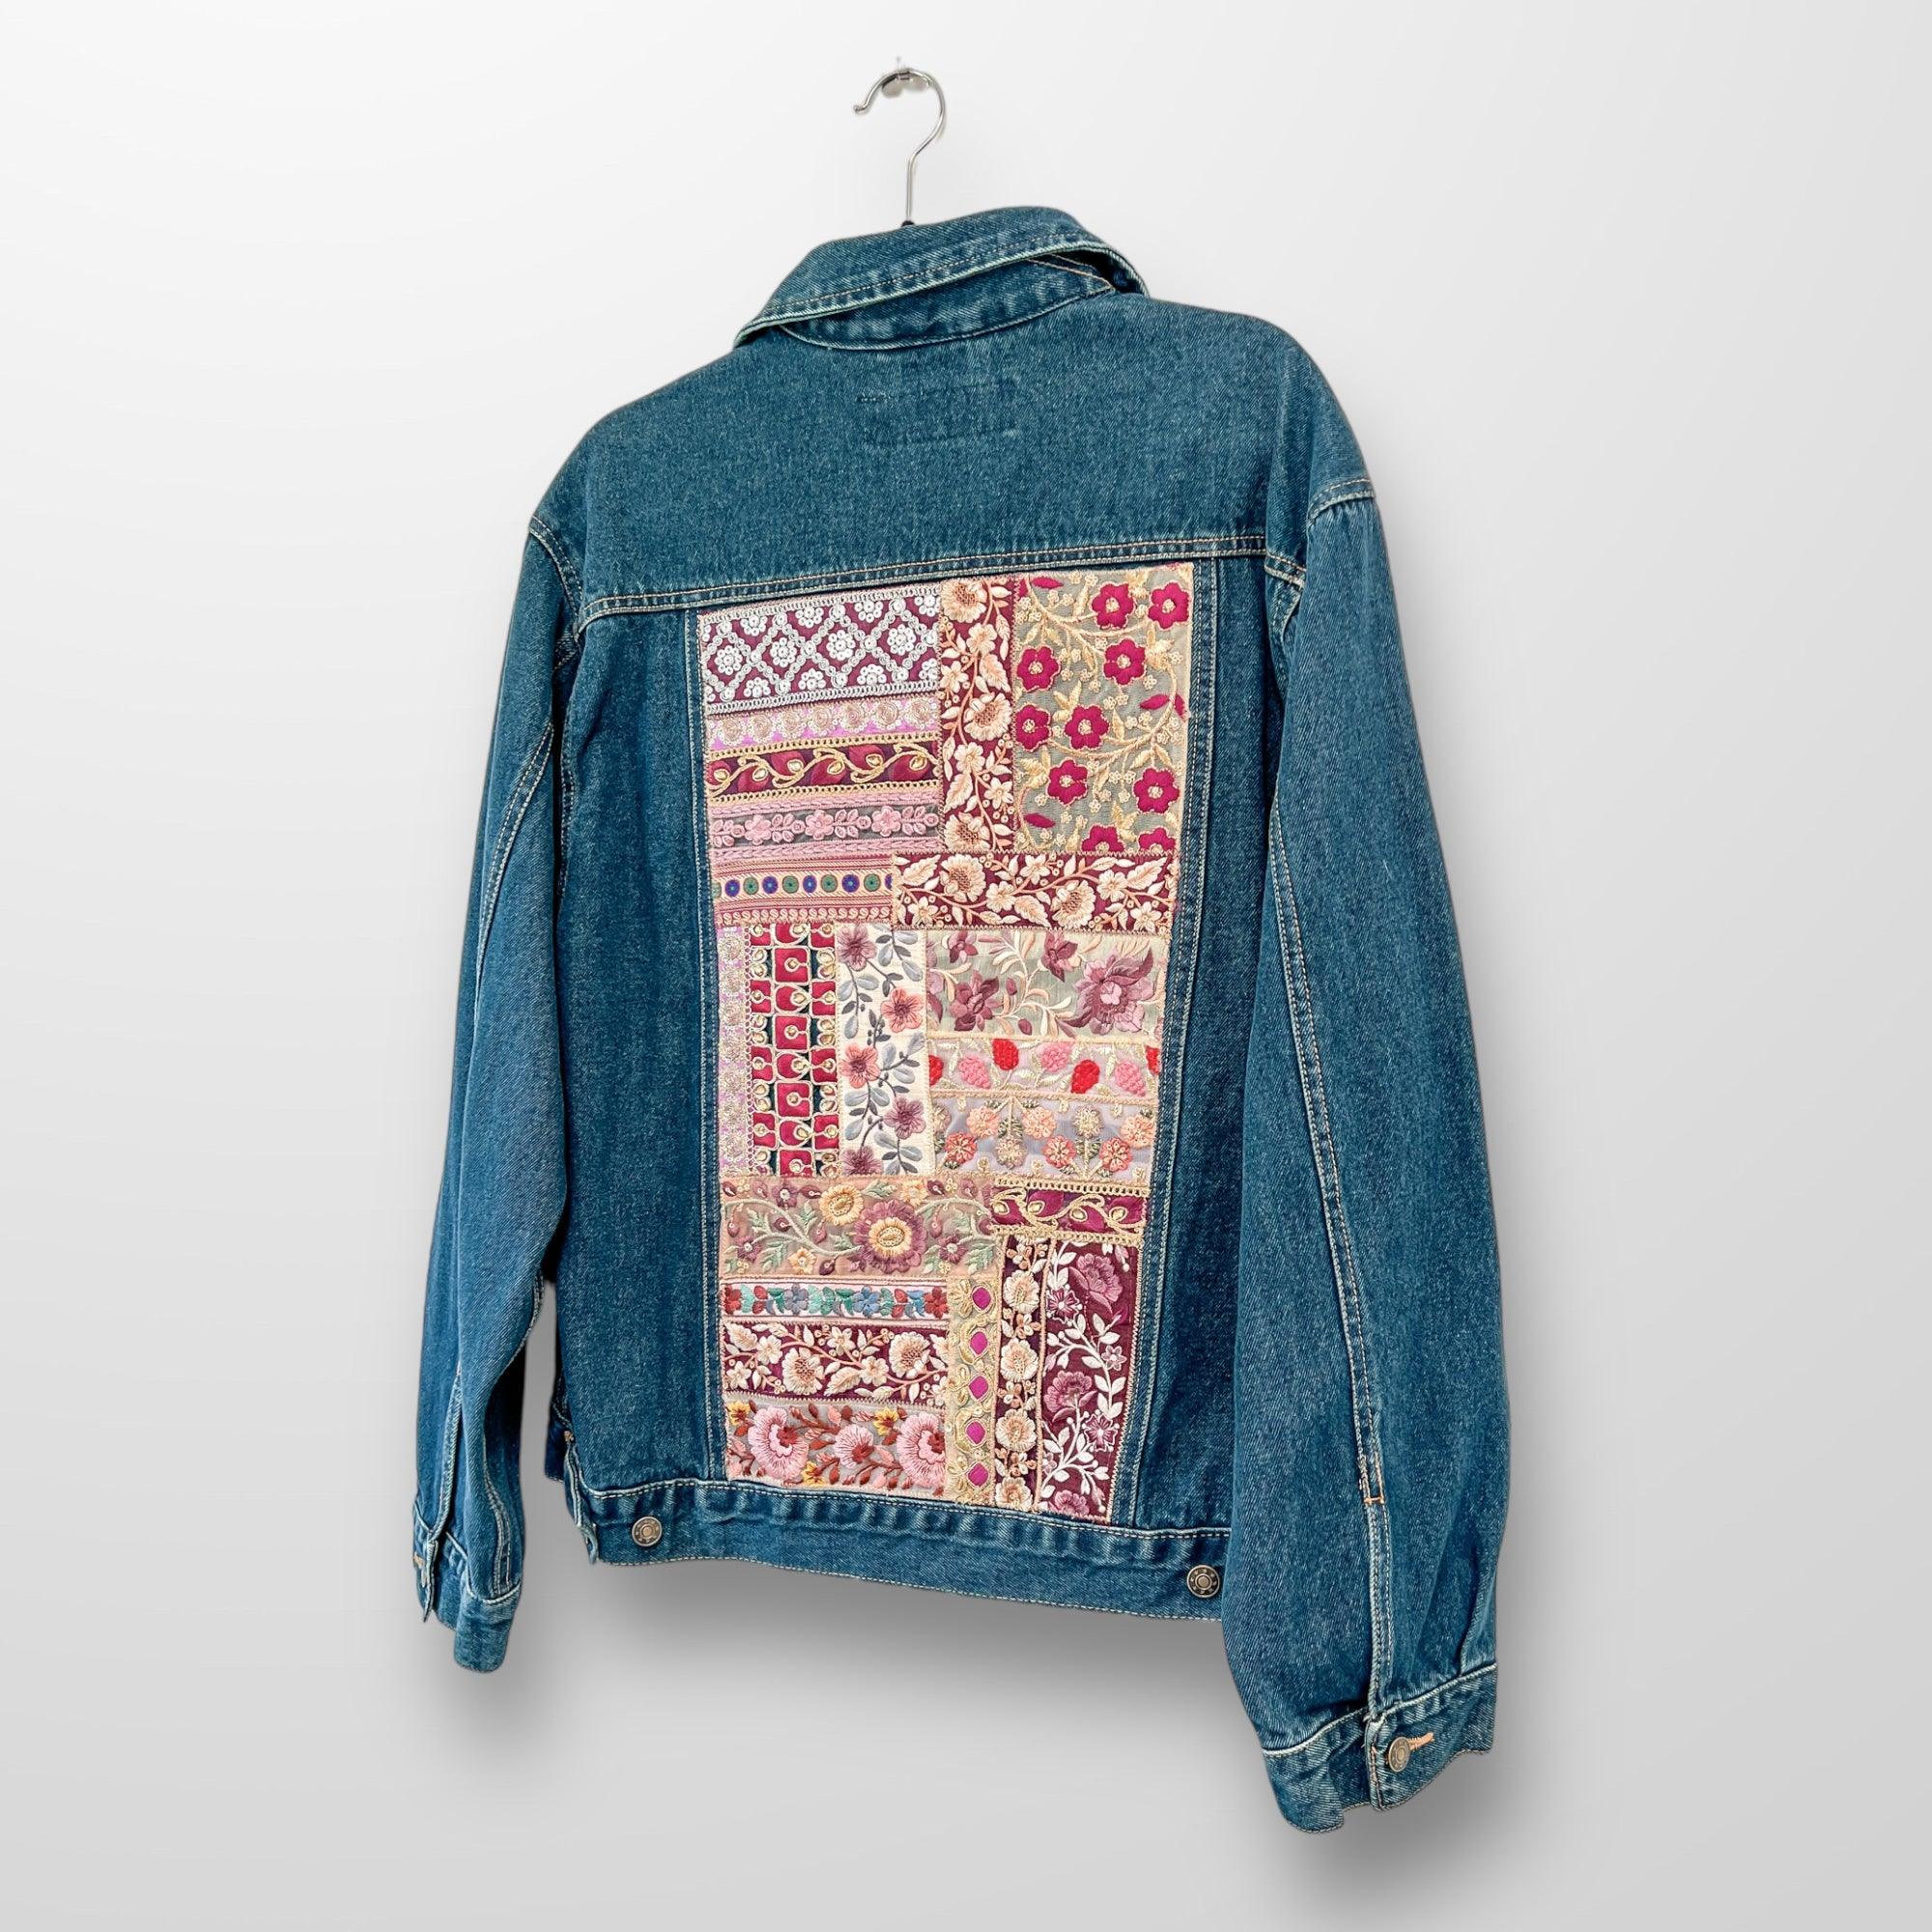 Upcycle clothing. Embellished jean jacket with patchwork sari scraps on back. Sustainable fashion.